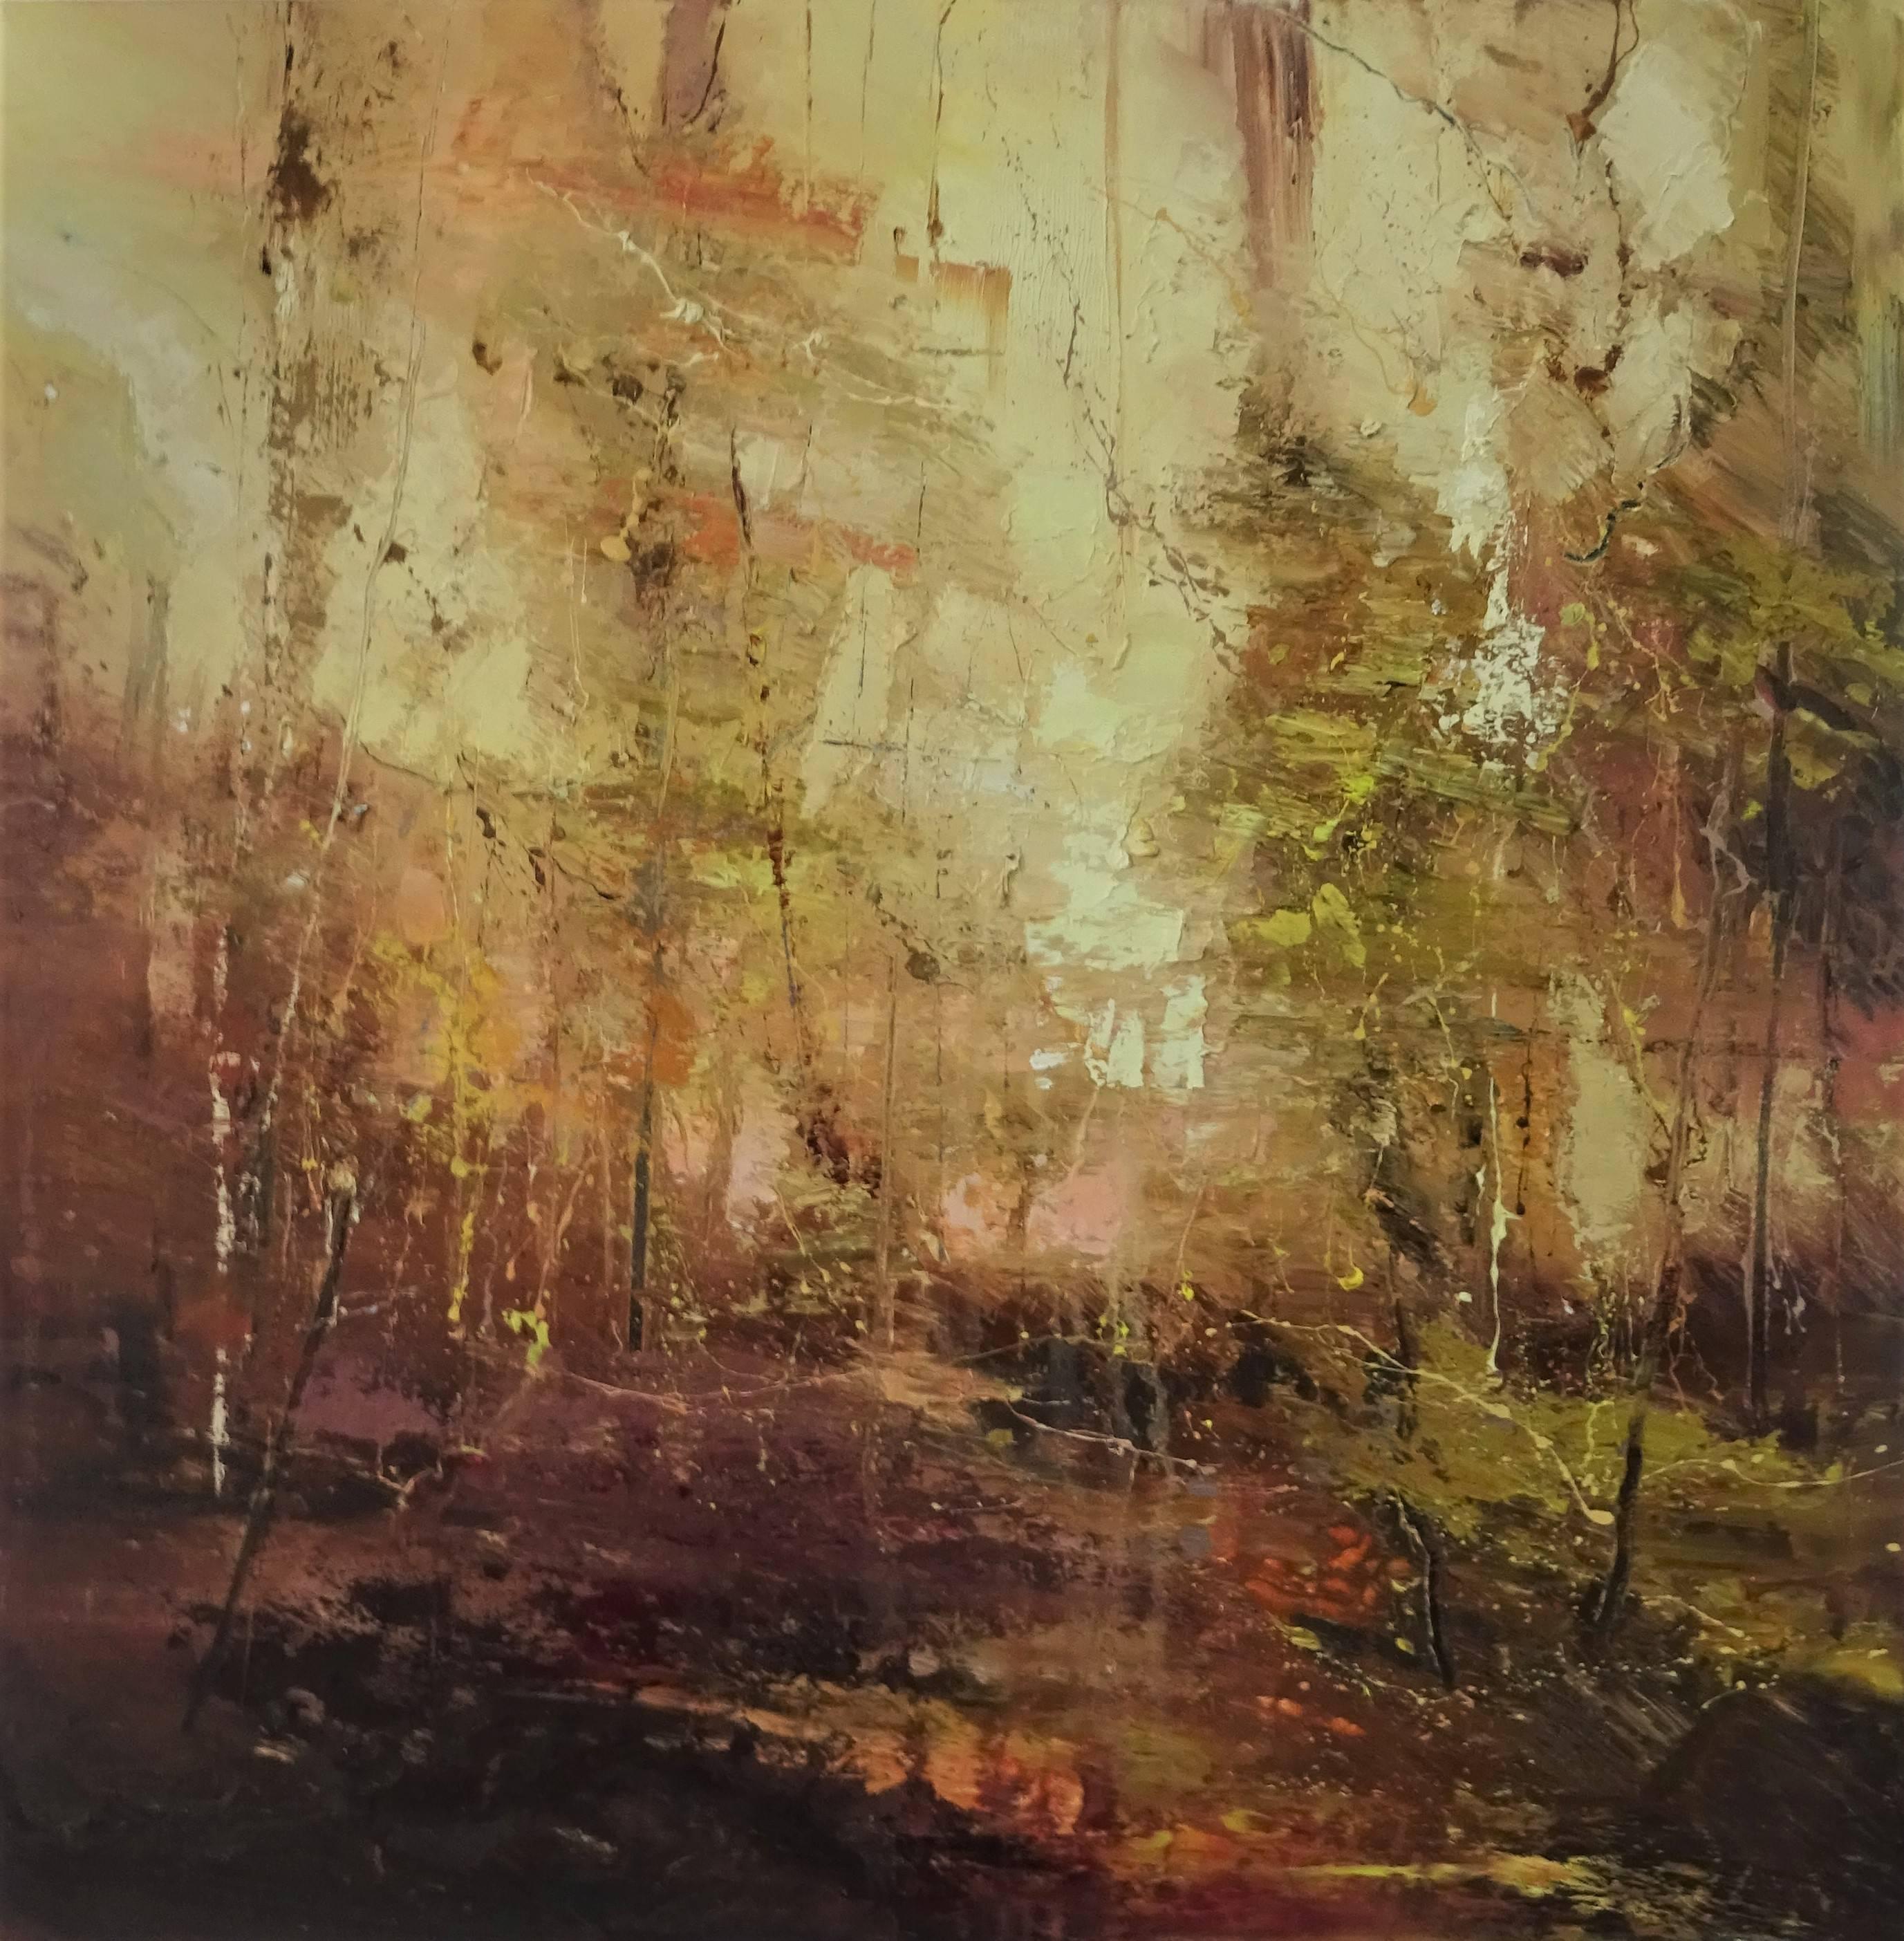 Claire Wiltsher Landscape Painting - Autumn sensation  -contemporary abstract landscape painting oil on canvas  